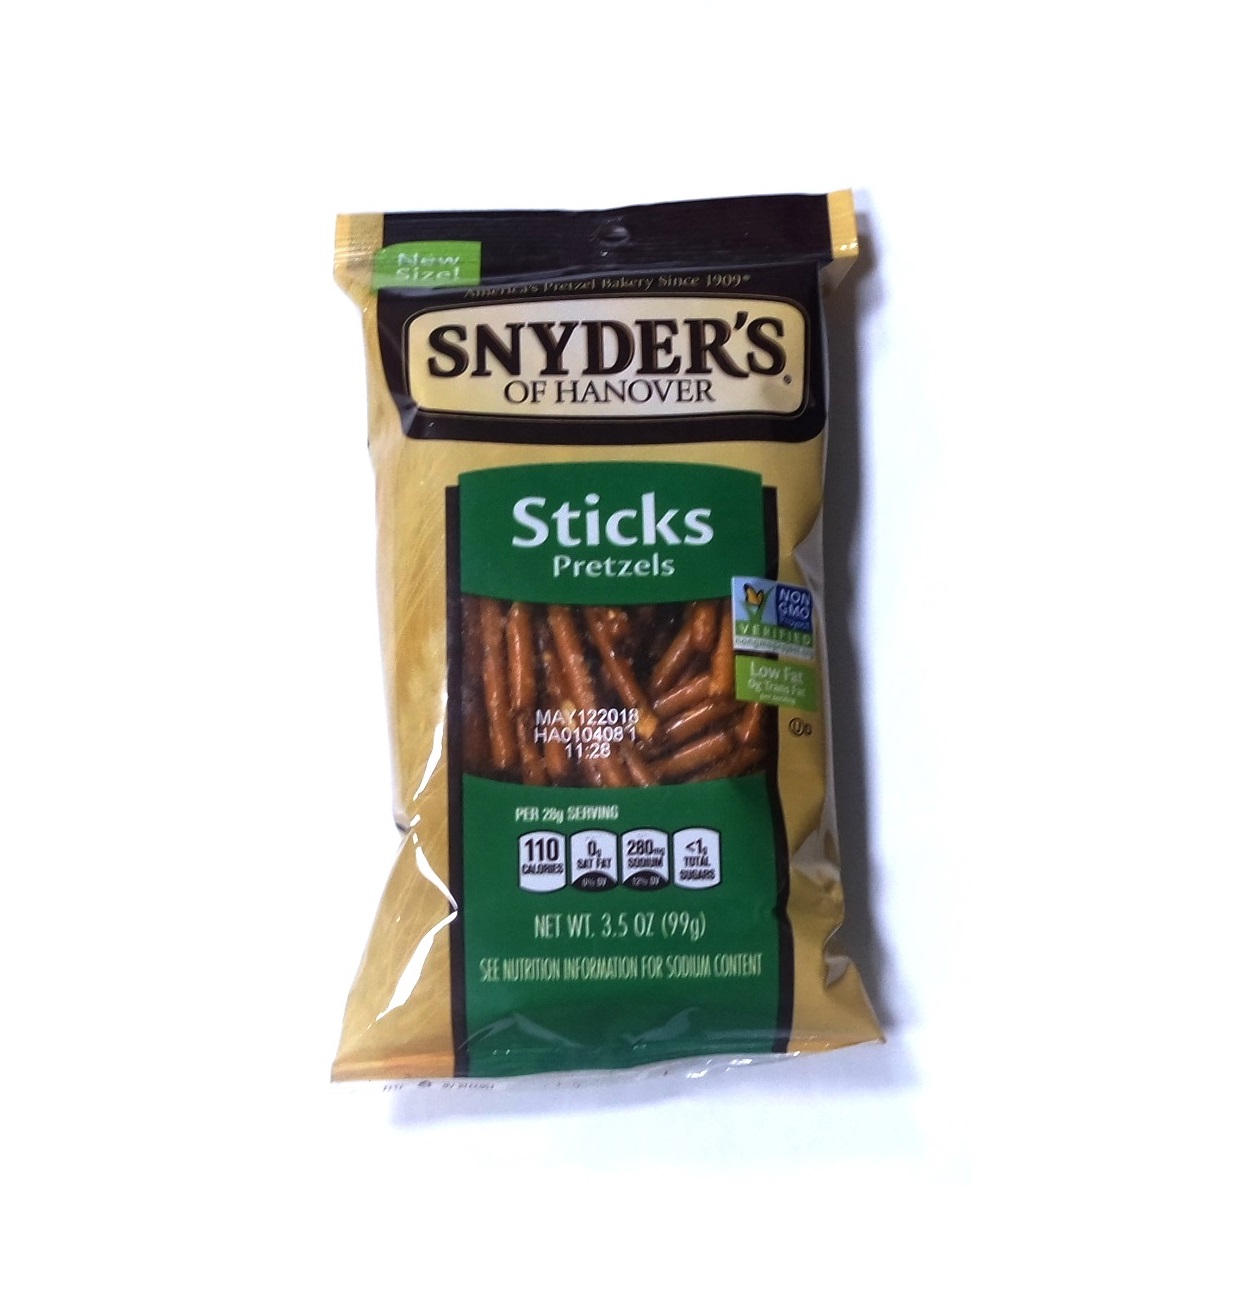 Snyders sticks pretzels 3.5oz